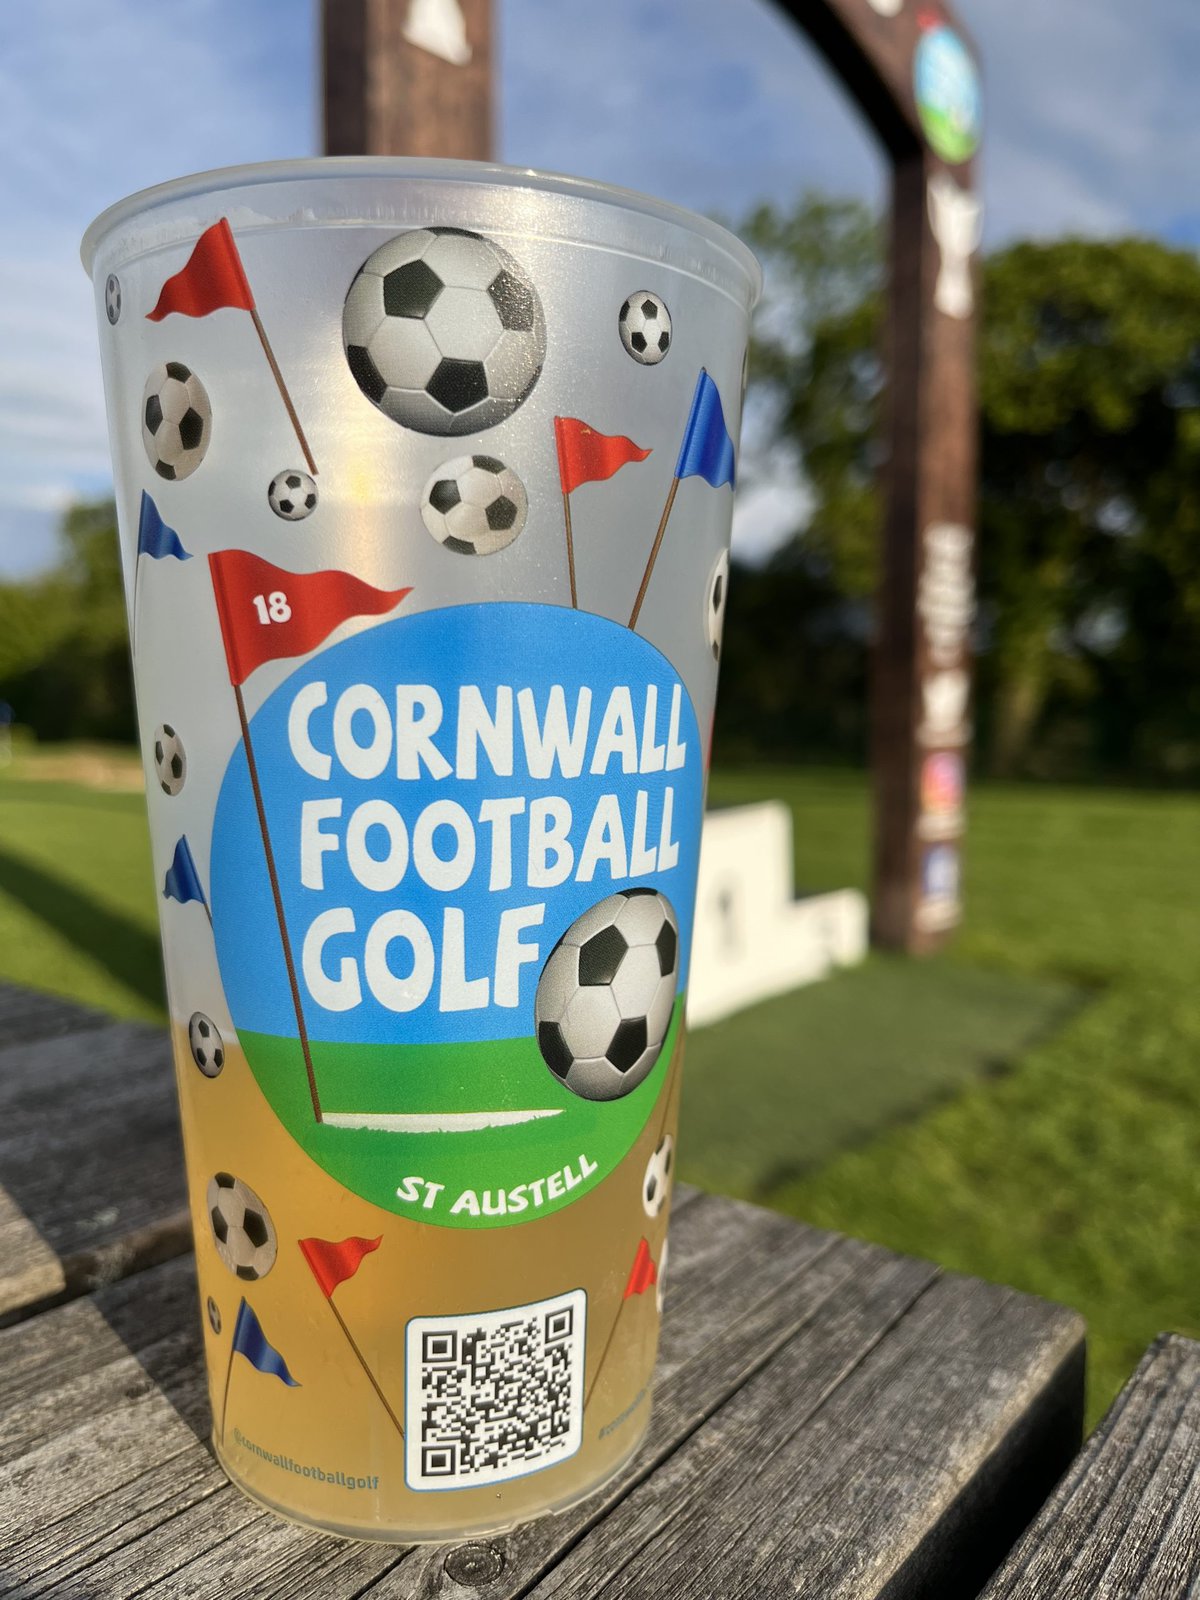 Reusable Plastic FootballGolf Cups - Enjoy your drink at Cornwall FootballGolf